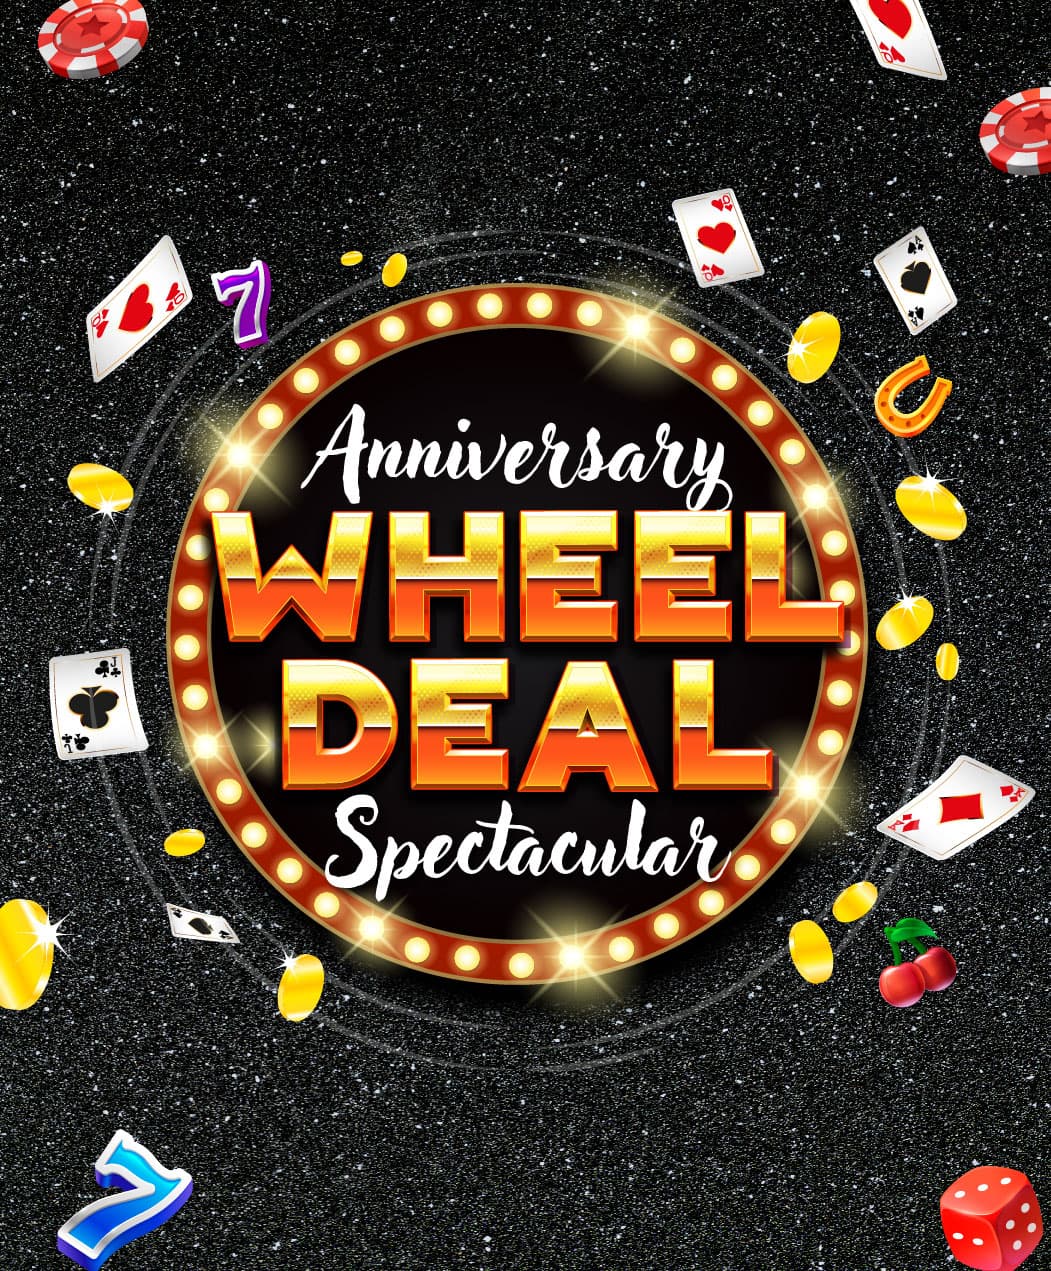 Anniversary Wheel Deal Spectacular